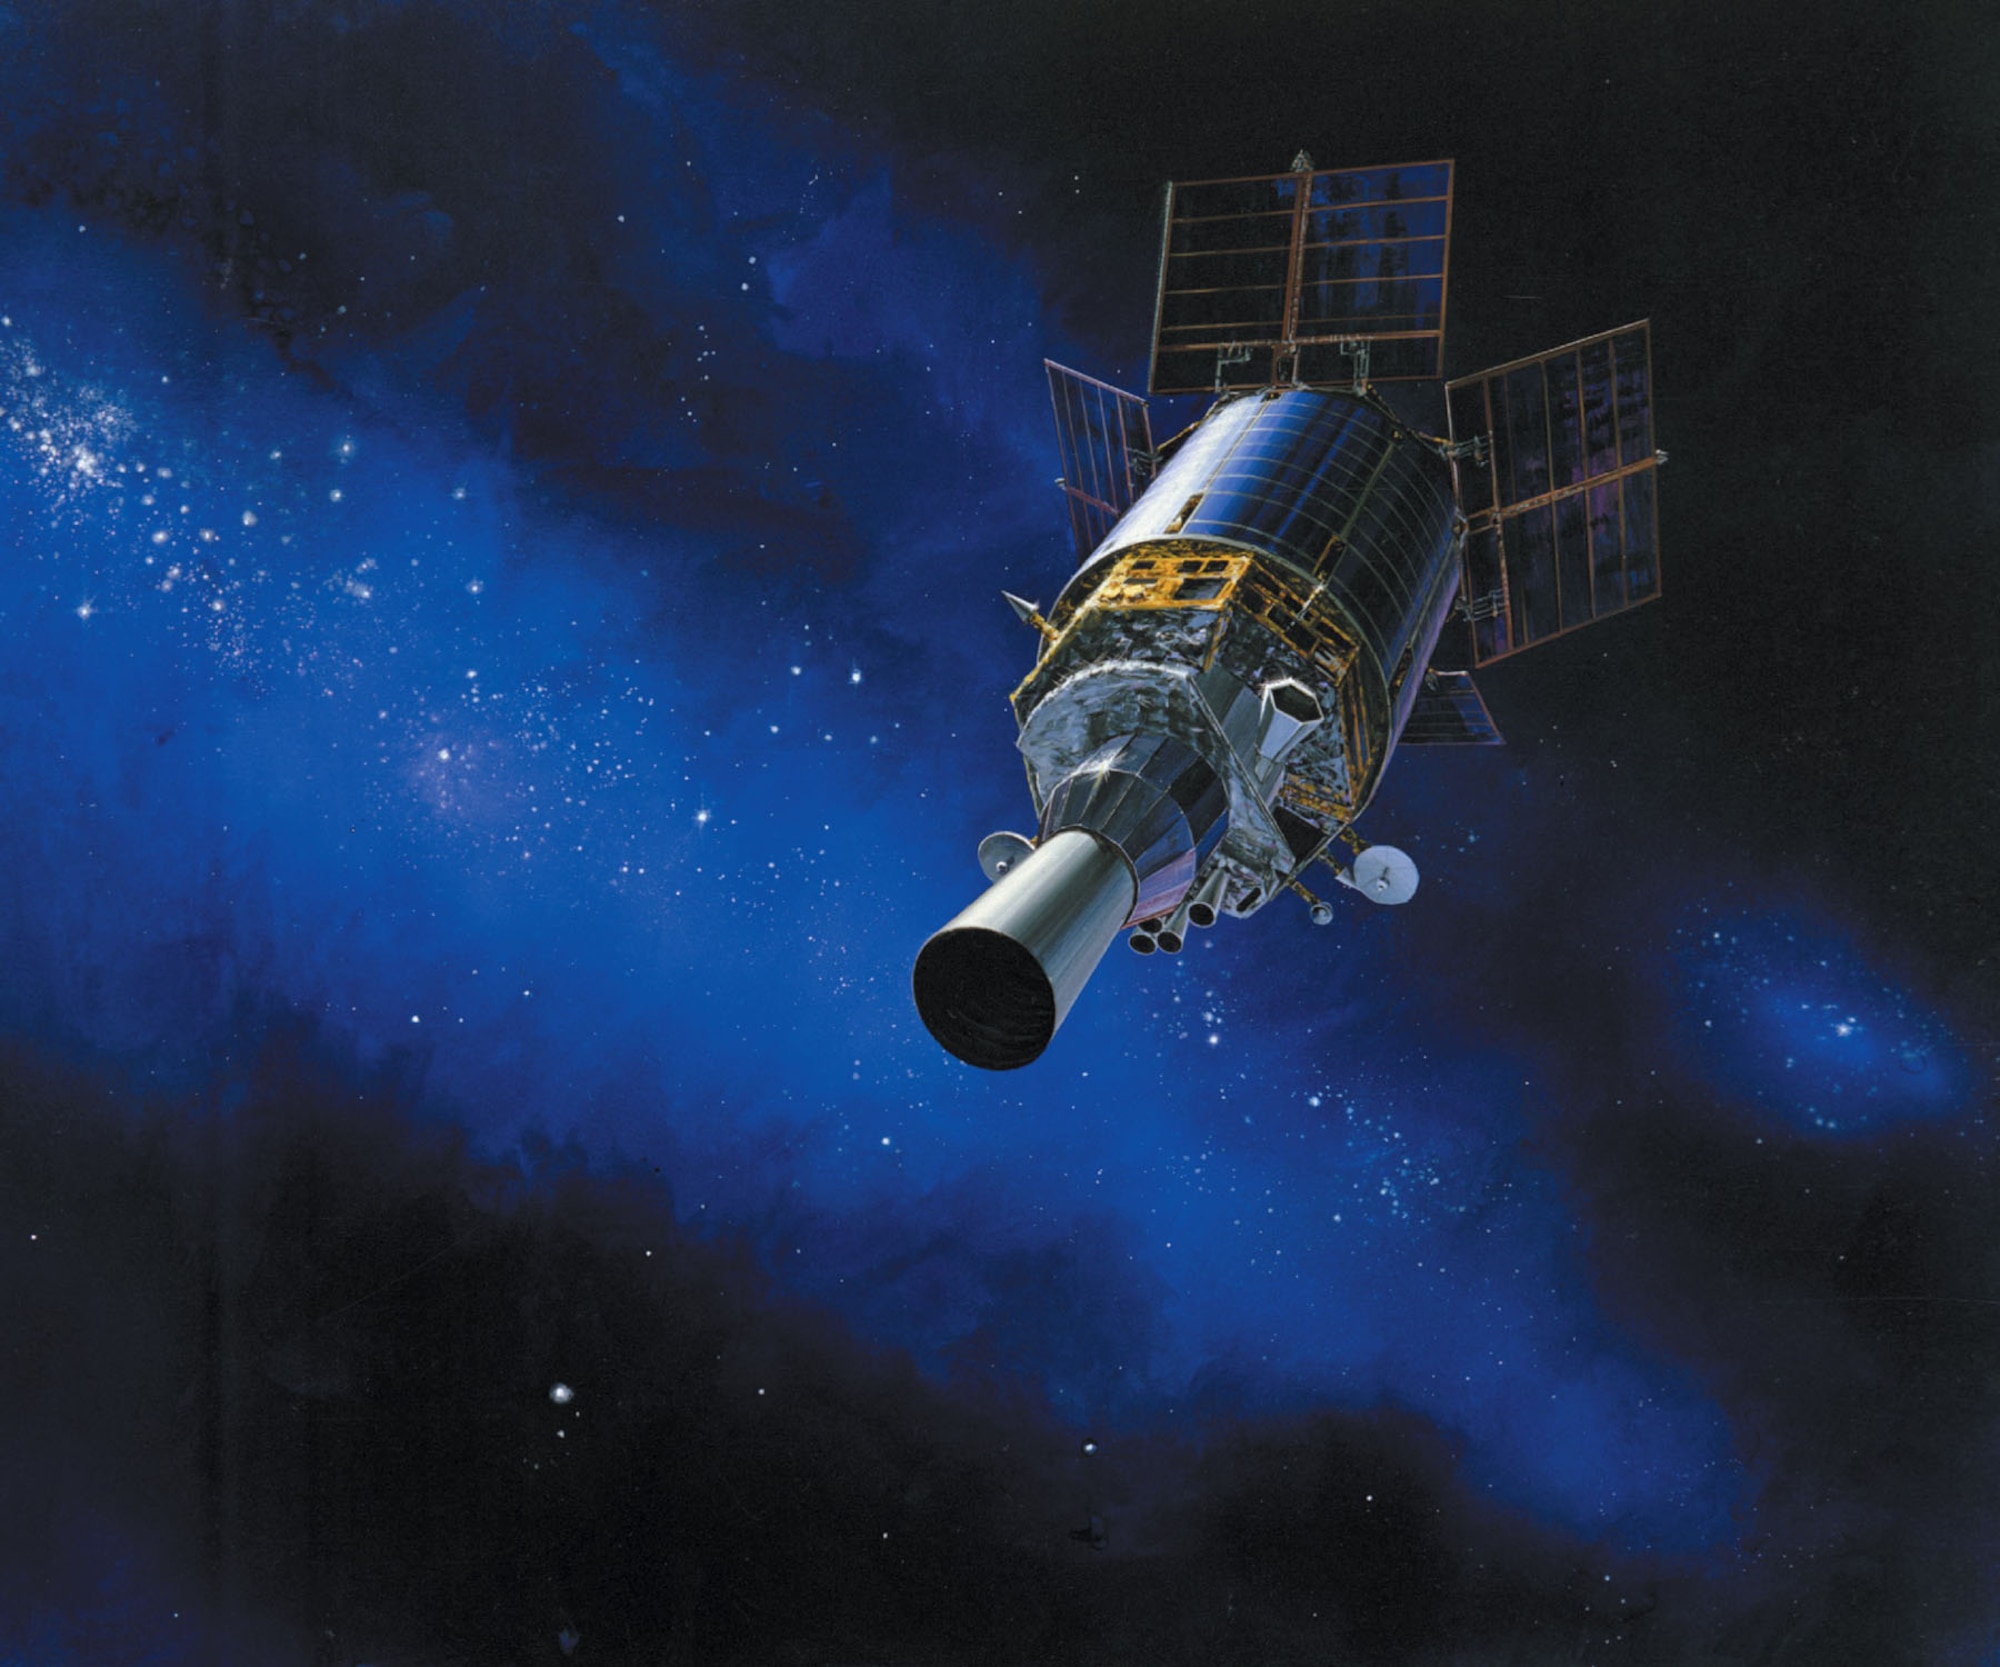 Artist rendering of a Defense Support Program (DSP) satellite in orbit. (Photo courtesy of Northrop Grumman)